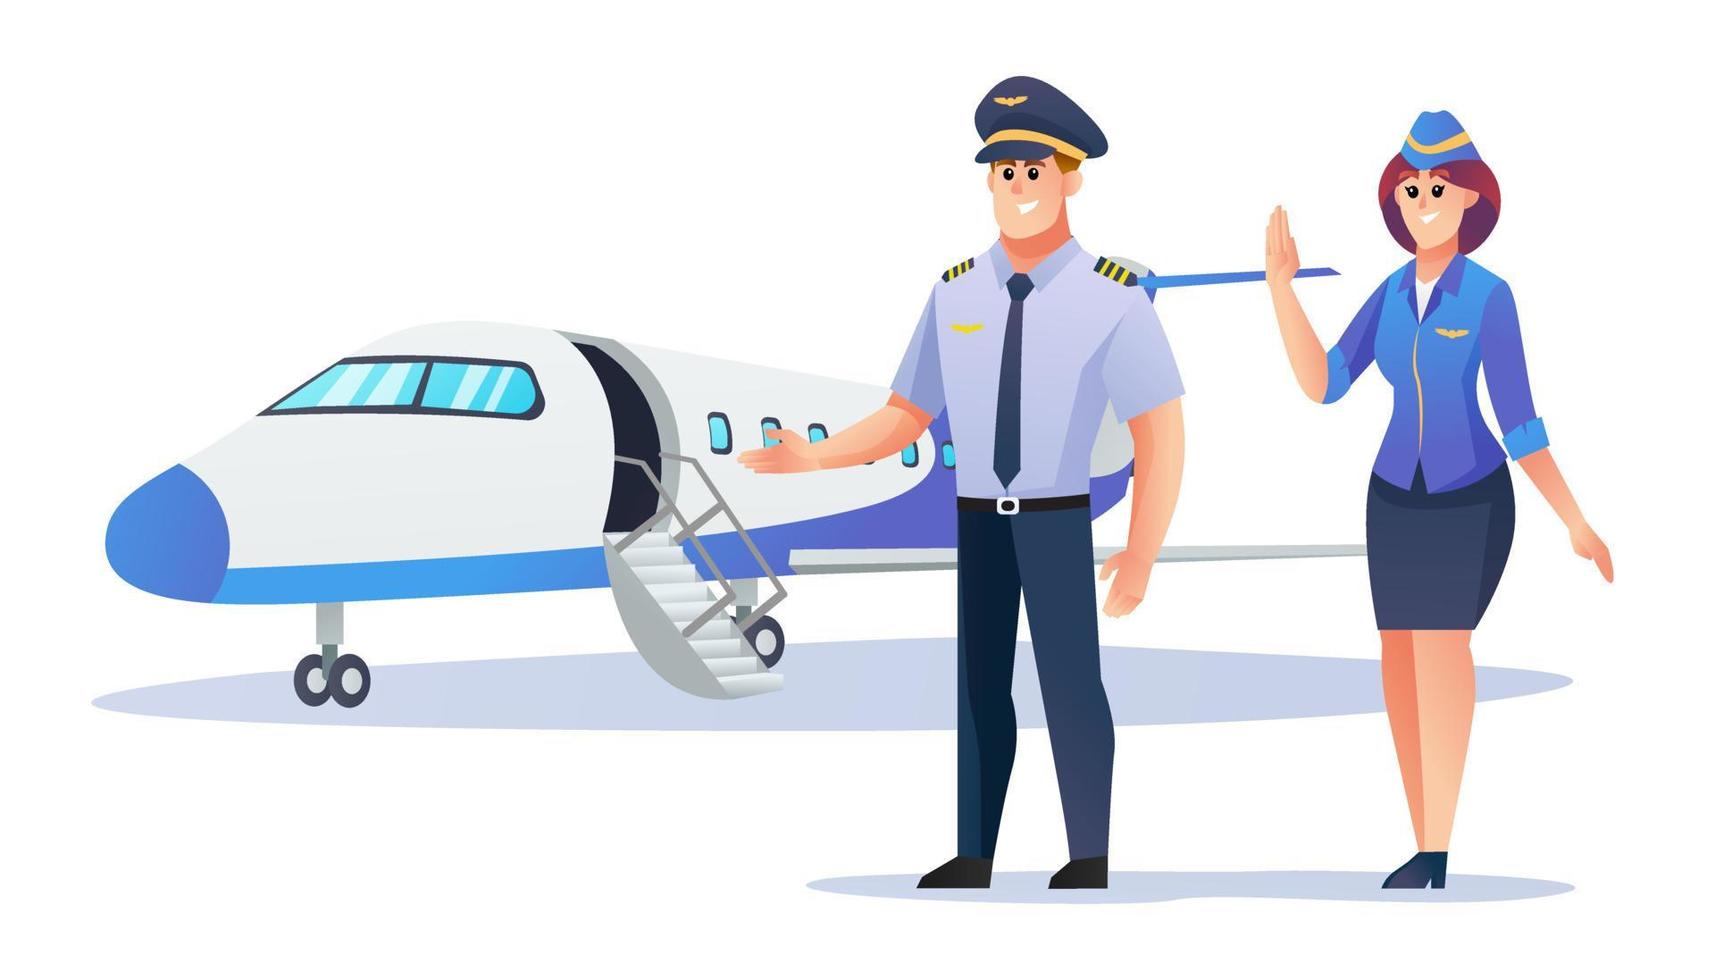 piloot en stewardess met vliegtuig cartoon afbeelding vector